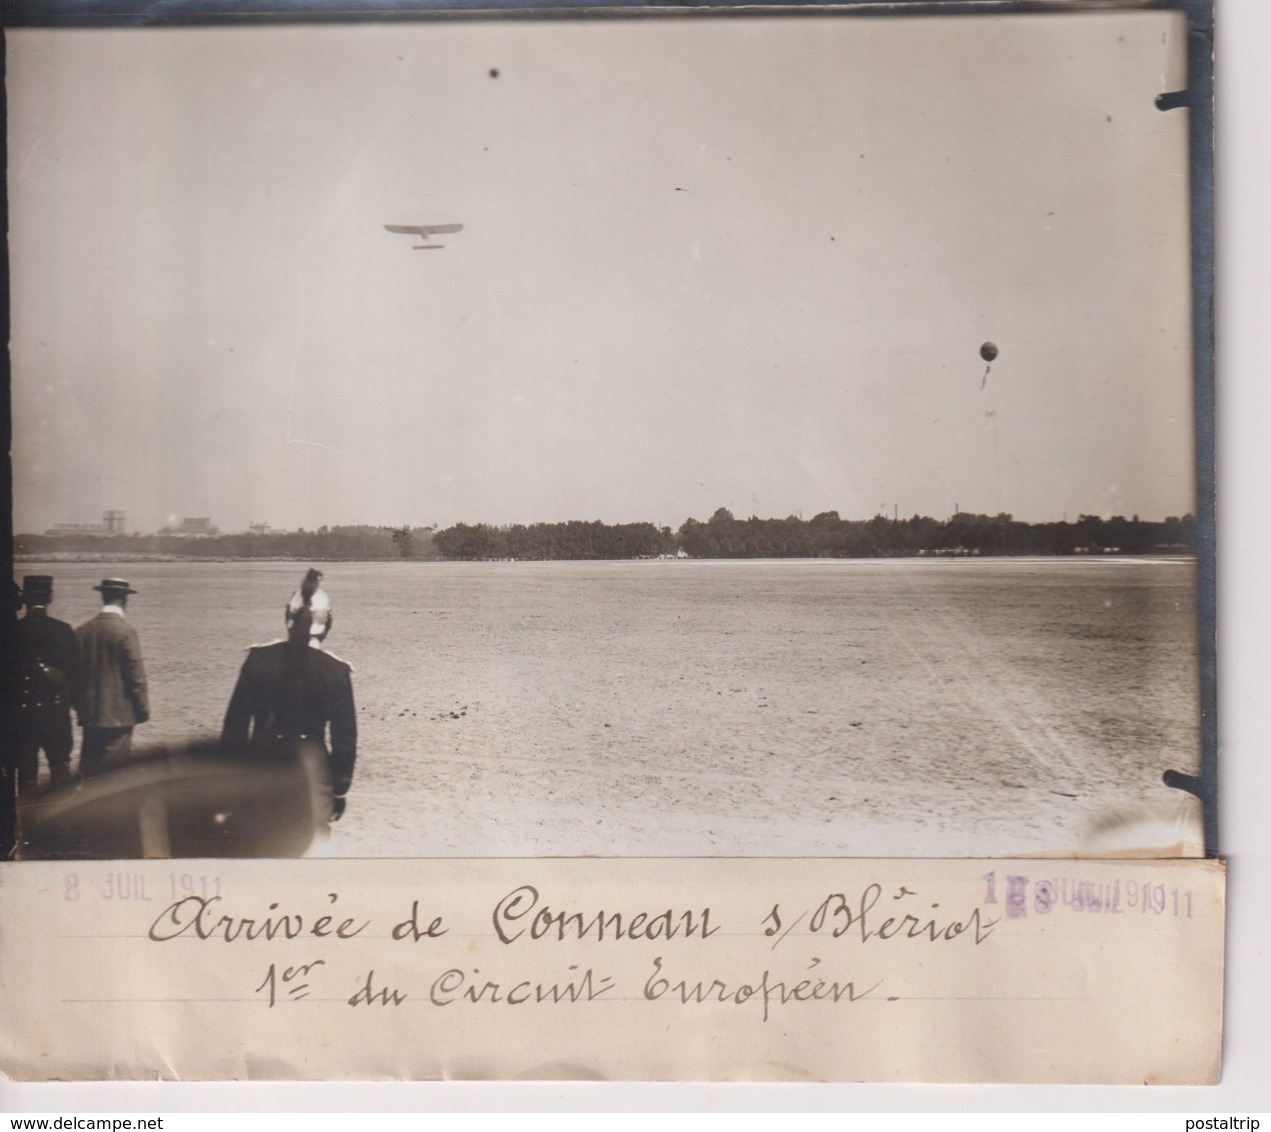 ARRIVÉE DE CONNEAU SUR BLÉRIOT 1ER DU CIRCUIT EUROPÉEN  AVION AVIACION 18*13CM Maurice-Louis BRANGER PARÍS (1874-1950) - Aviación